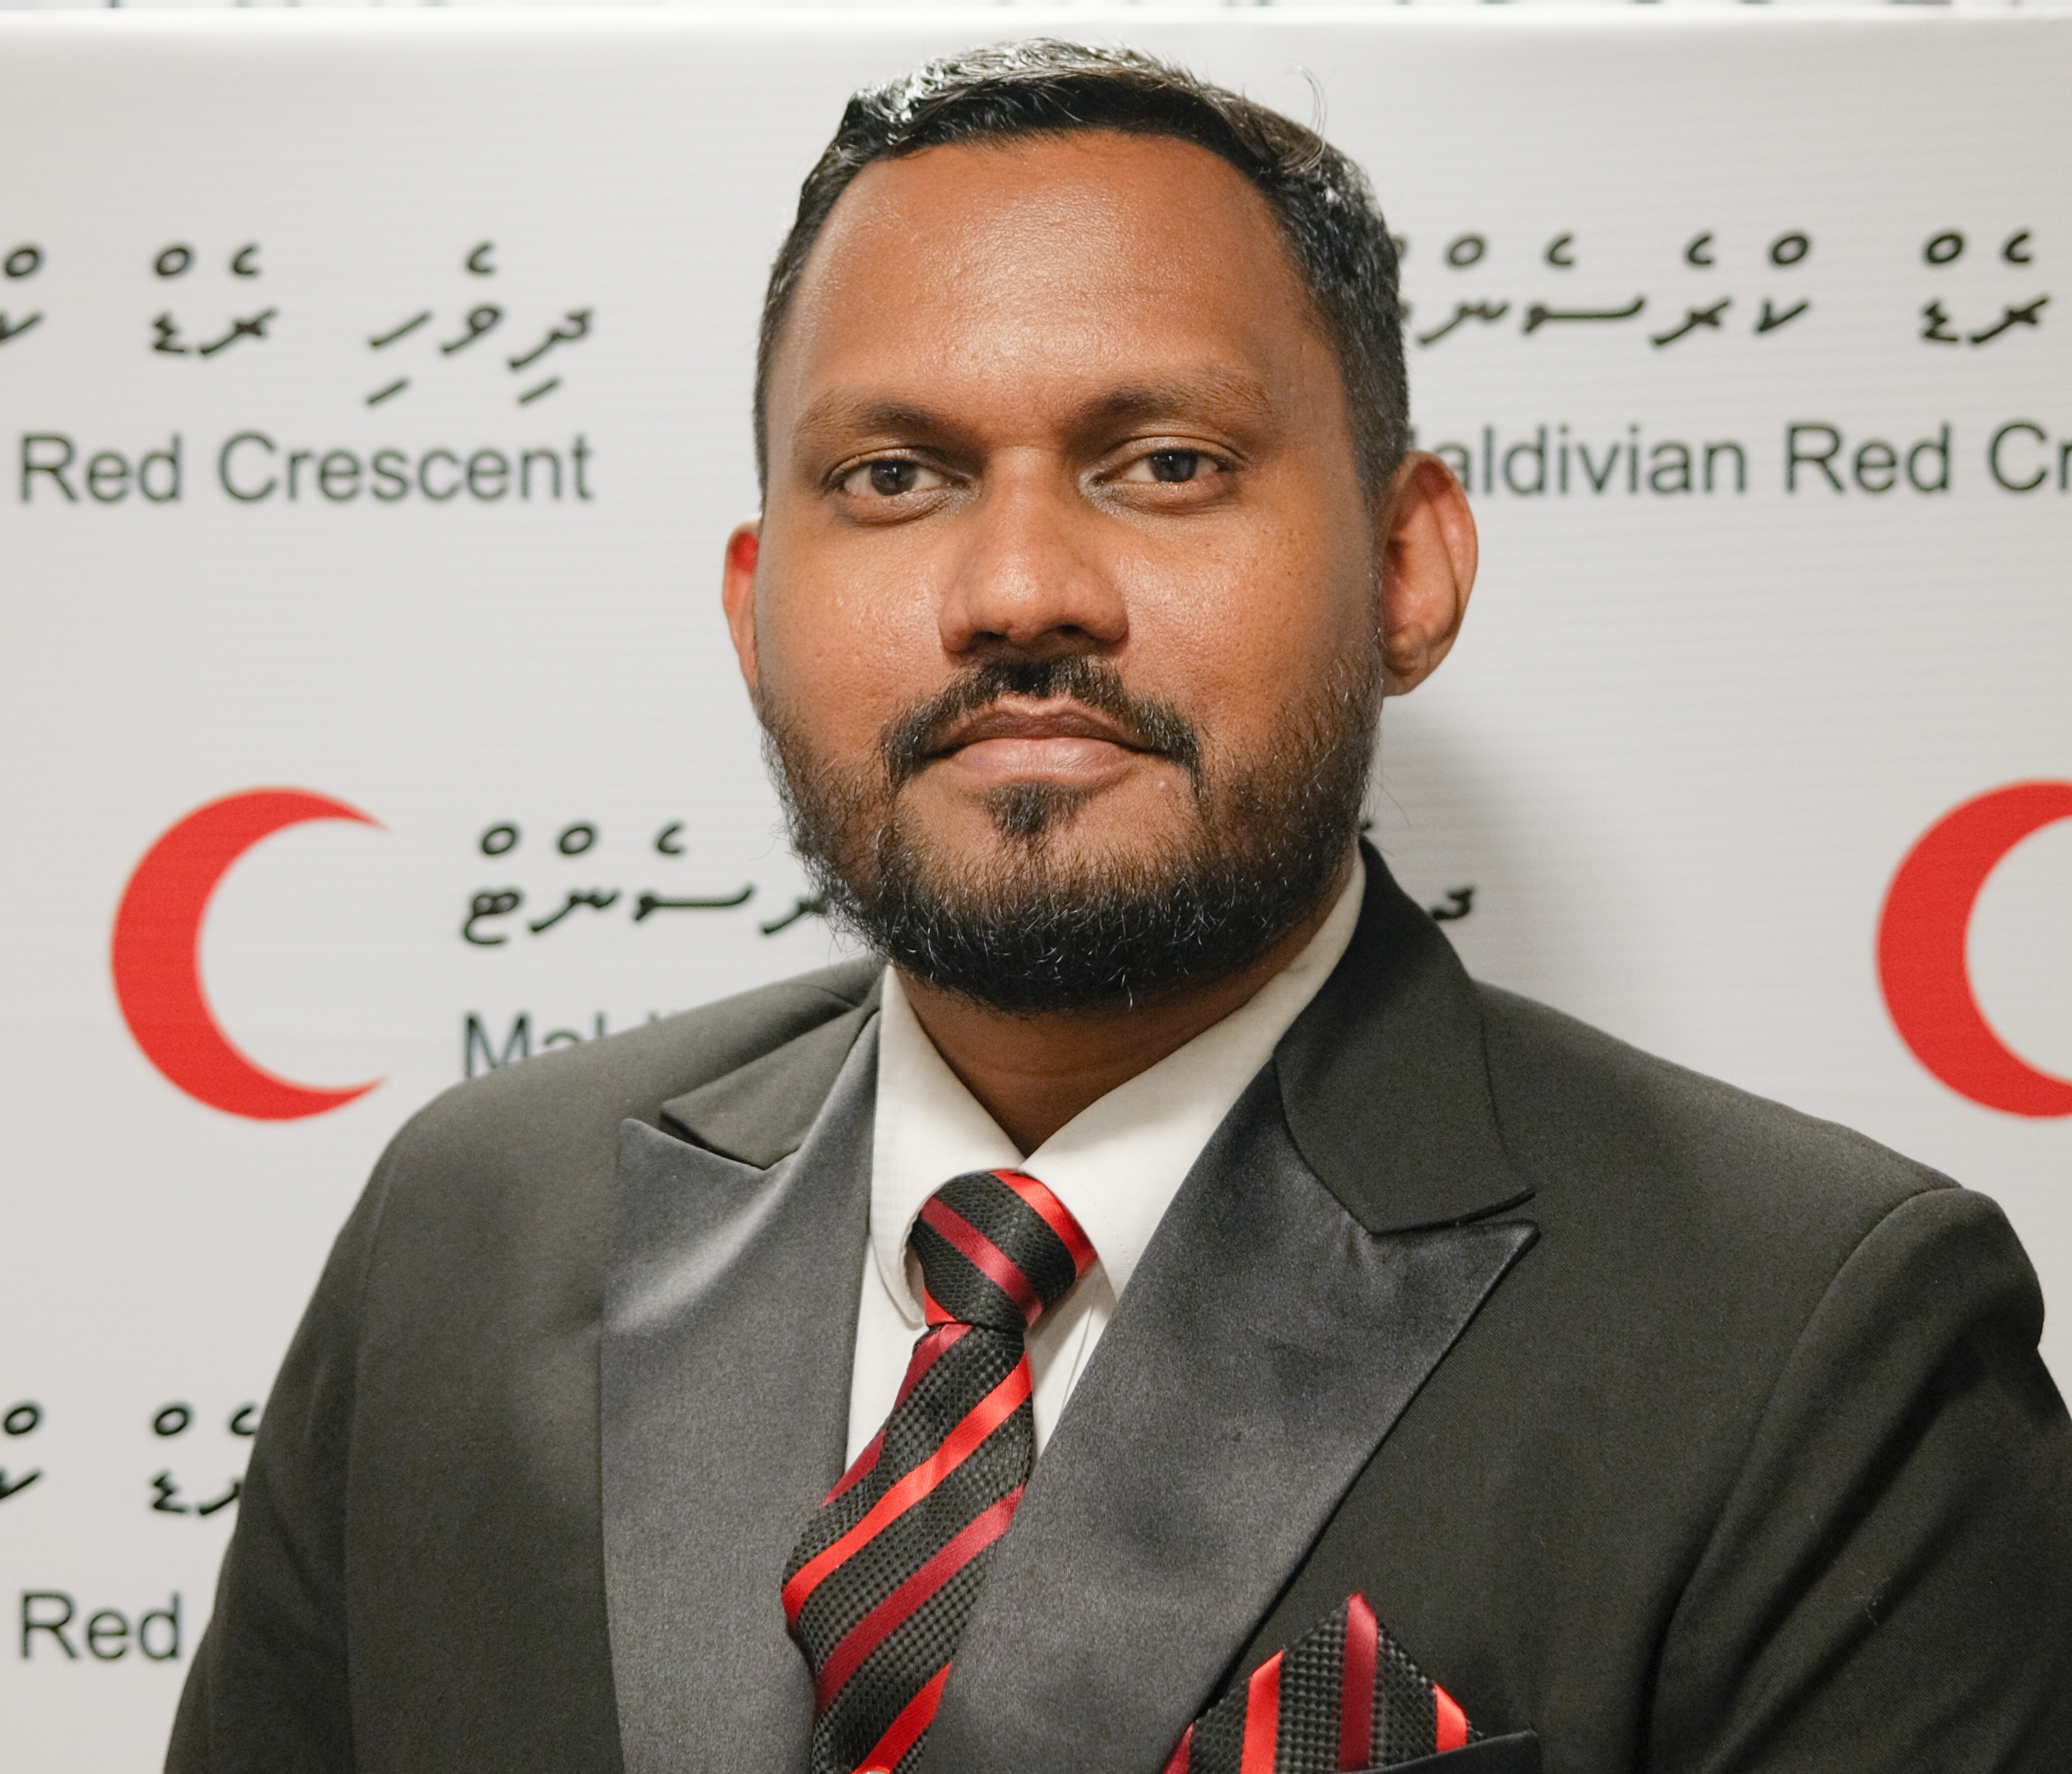 Mohamed Hoodh Ibrahim: Chairperson